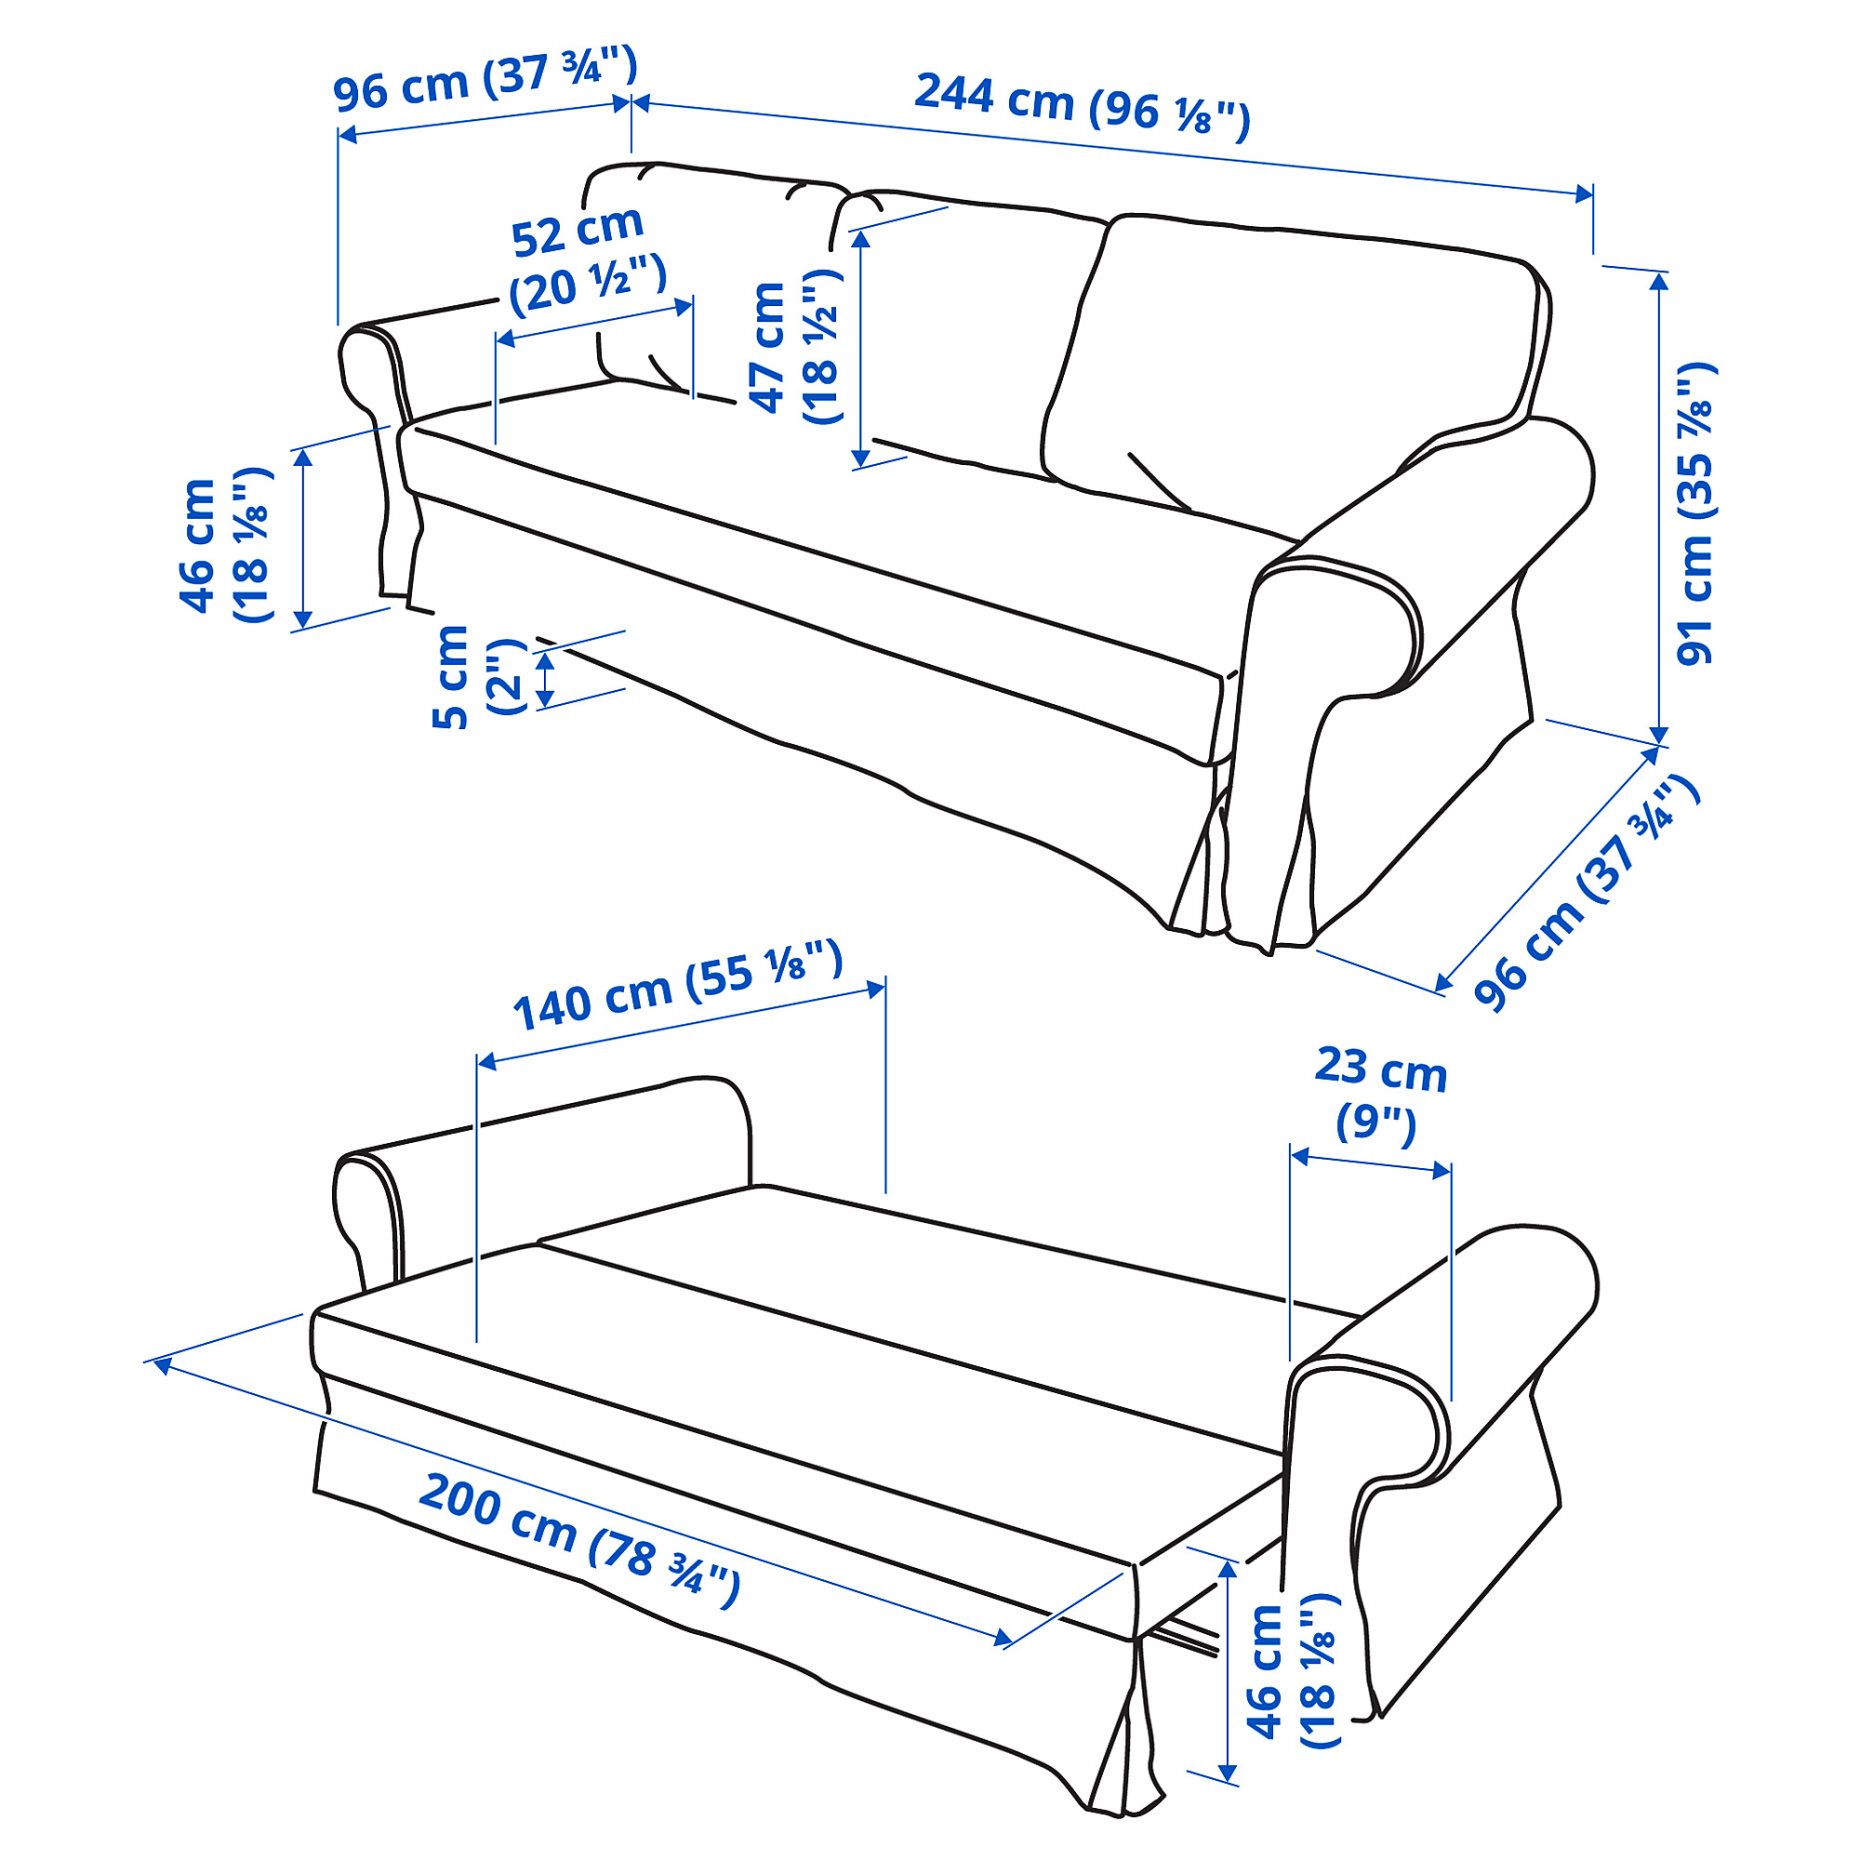 VRETSTORP, 3-seat sofa-bed, 593.201.13